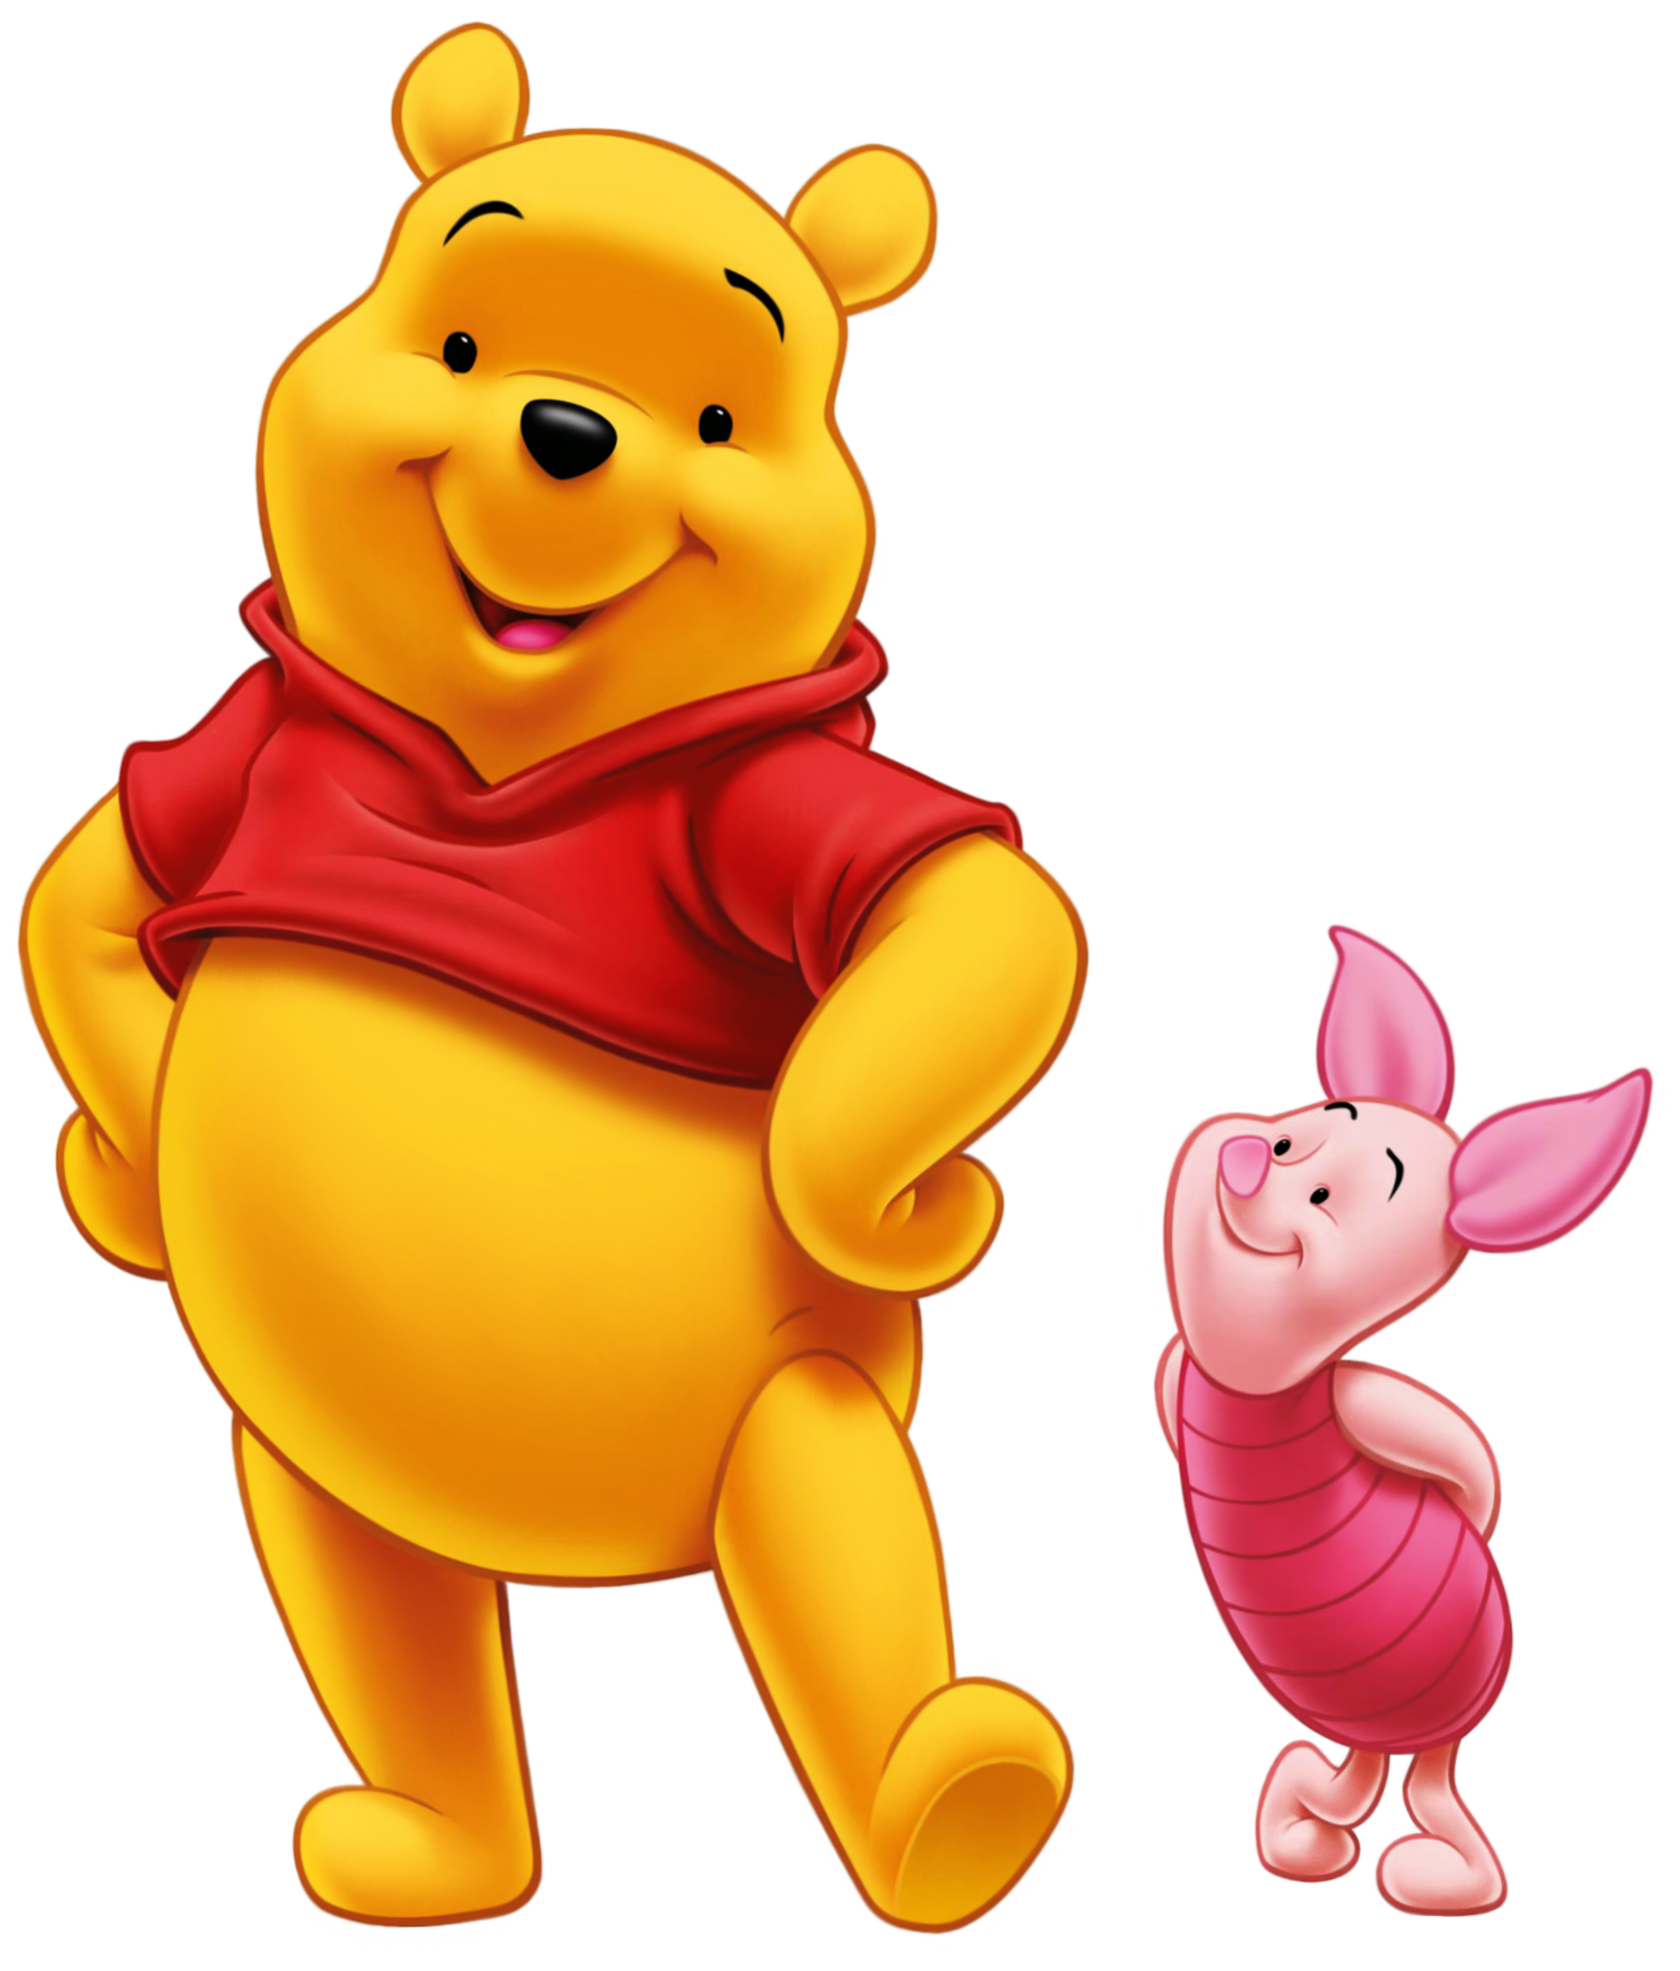 Winnie The Pooh, Piglet Winnie The Pooh Eeyore Cuando - Winnie The Pooh Characters Pooh (1776x2058)